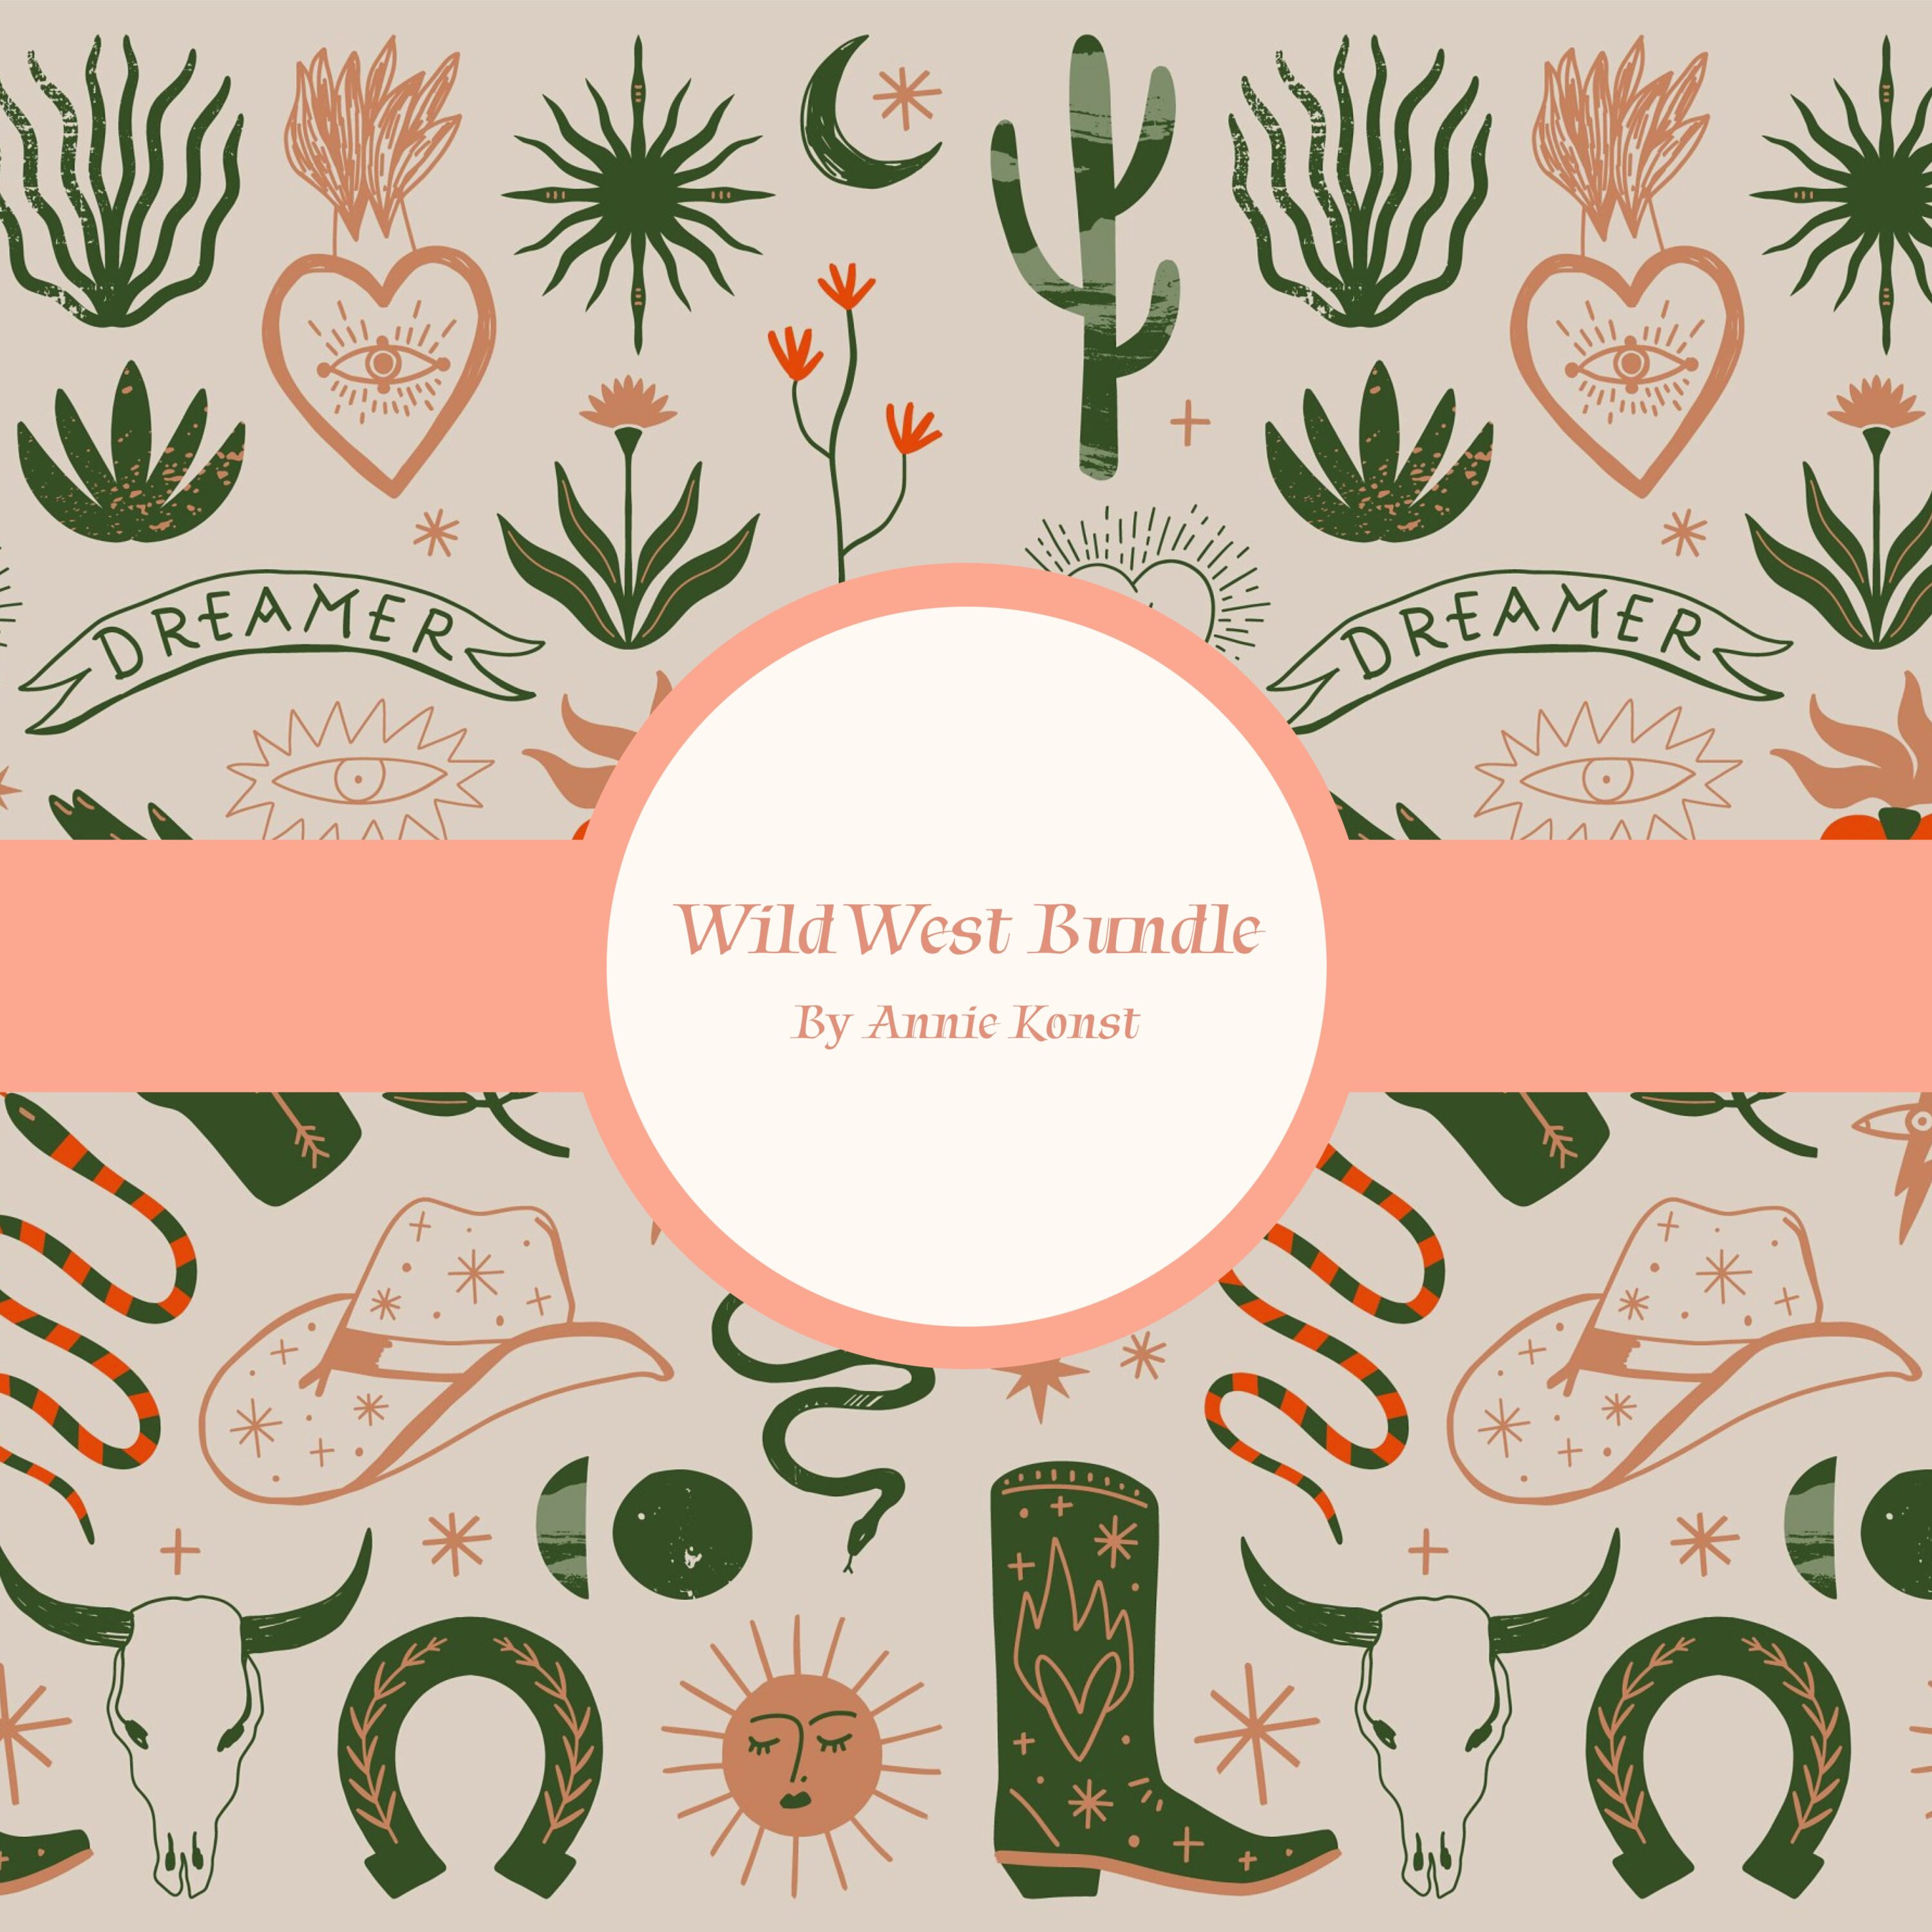 Wild West Bundle cover image.